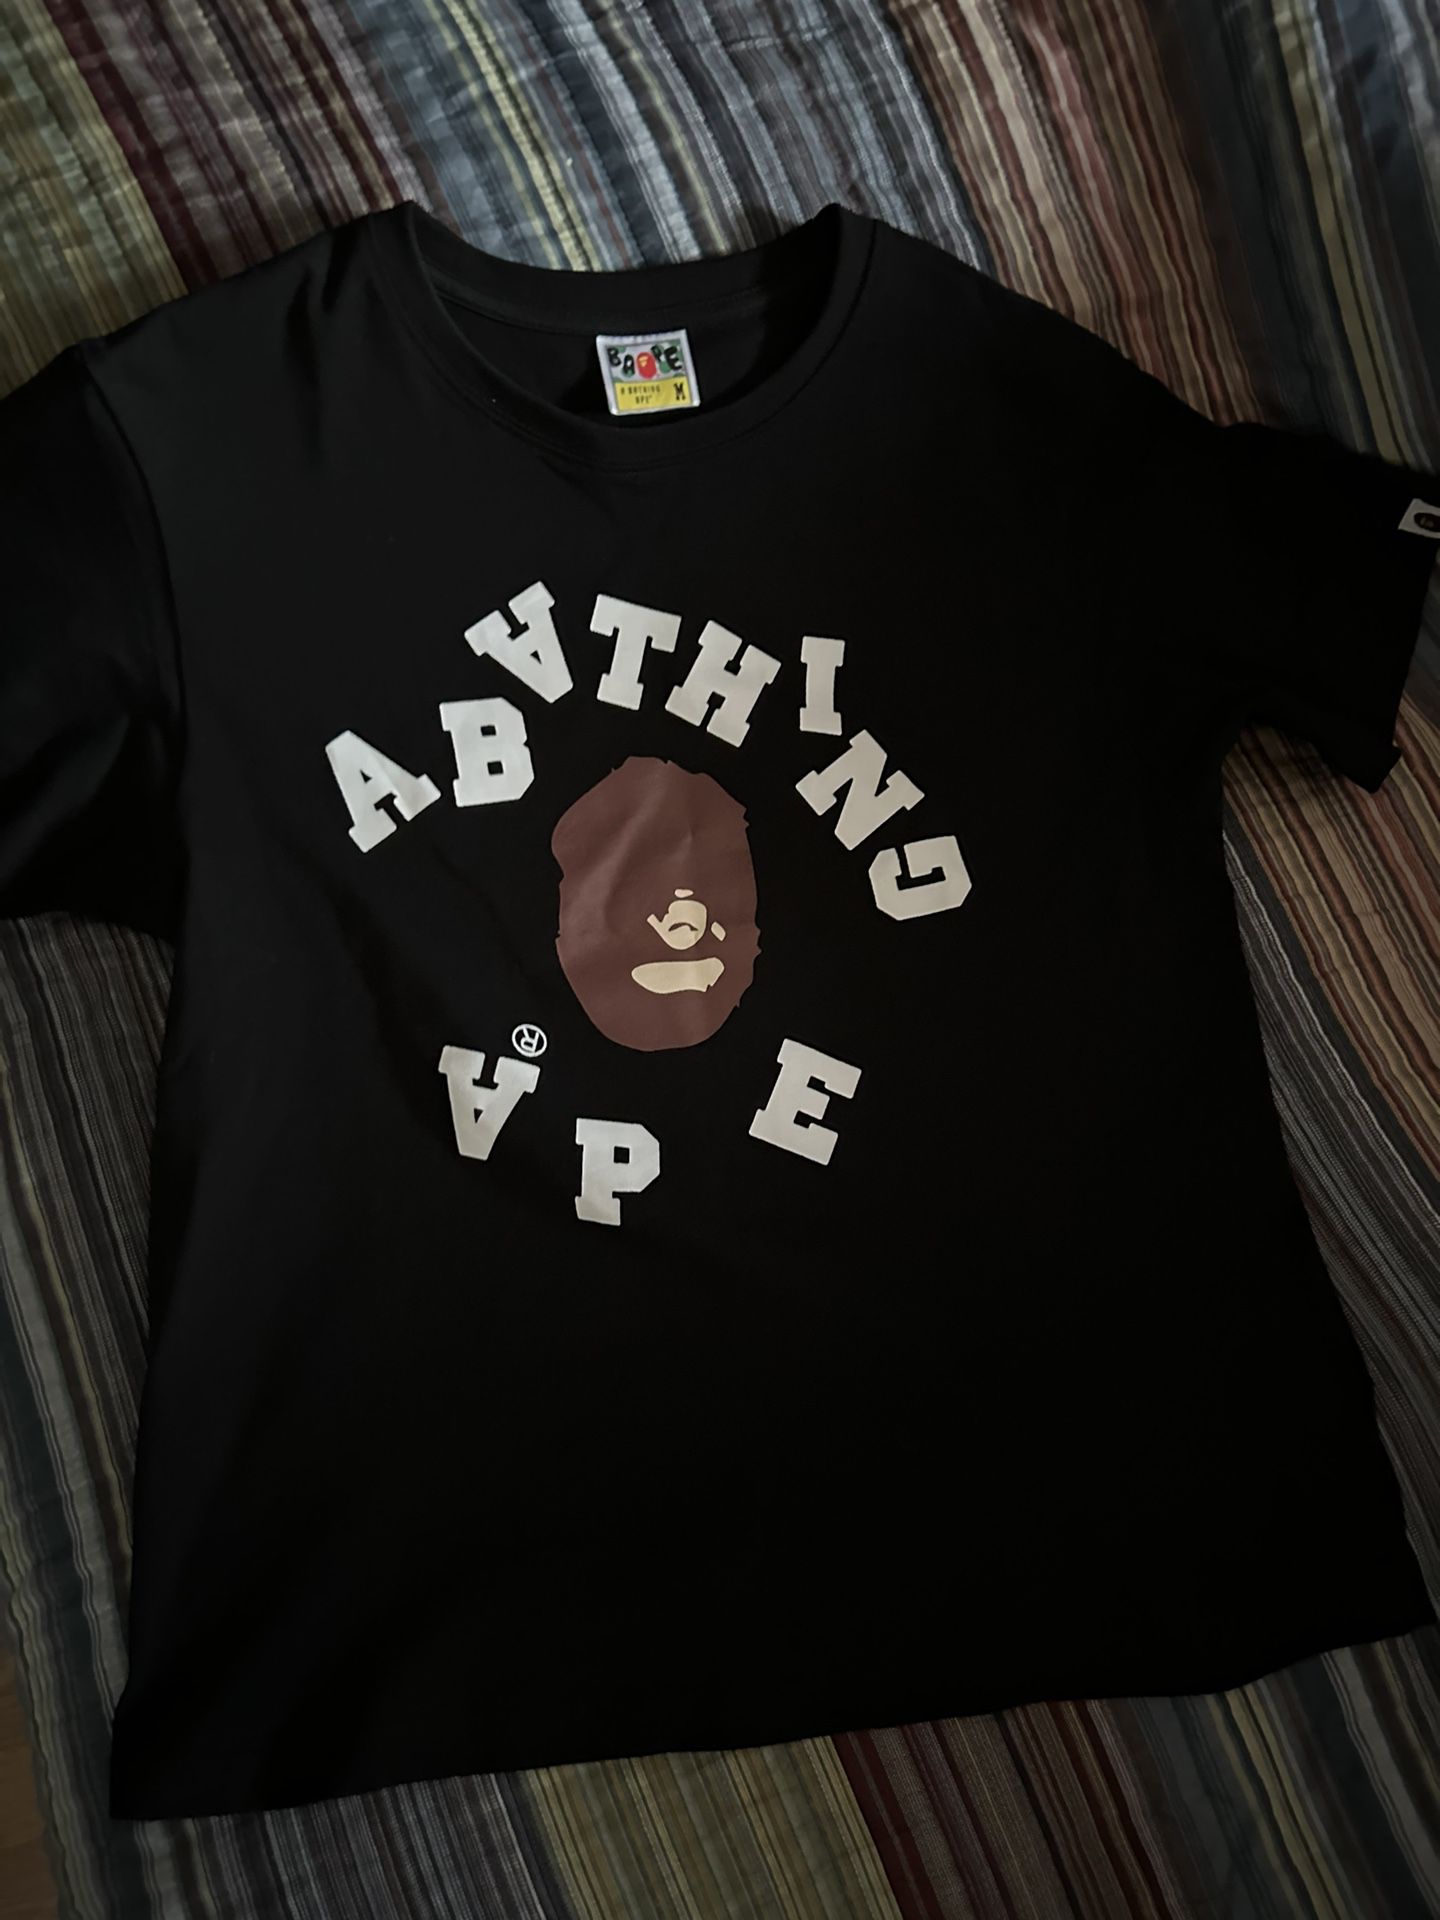 A Bathing Ape Black T Shirt 